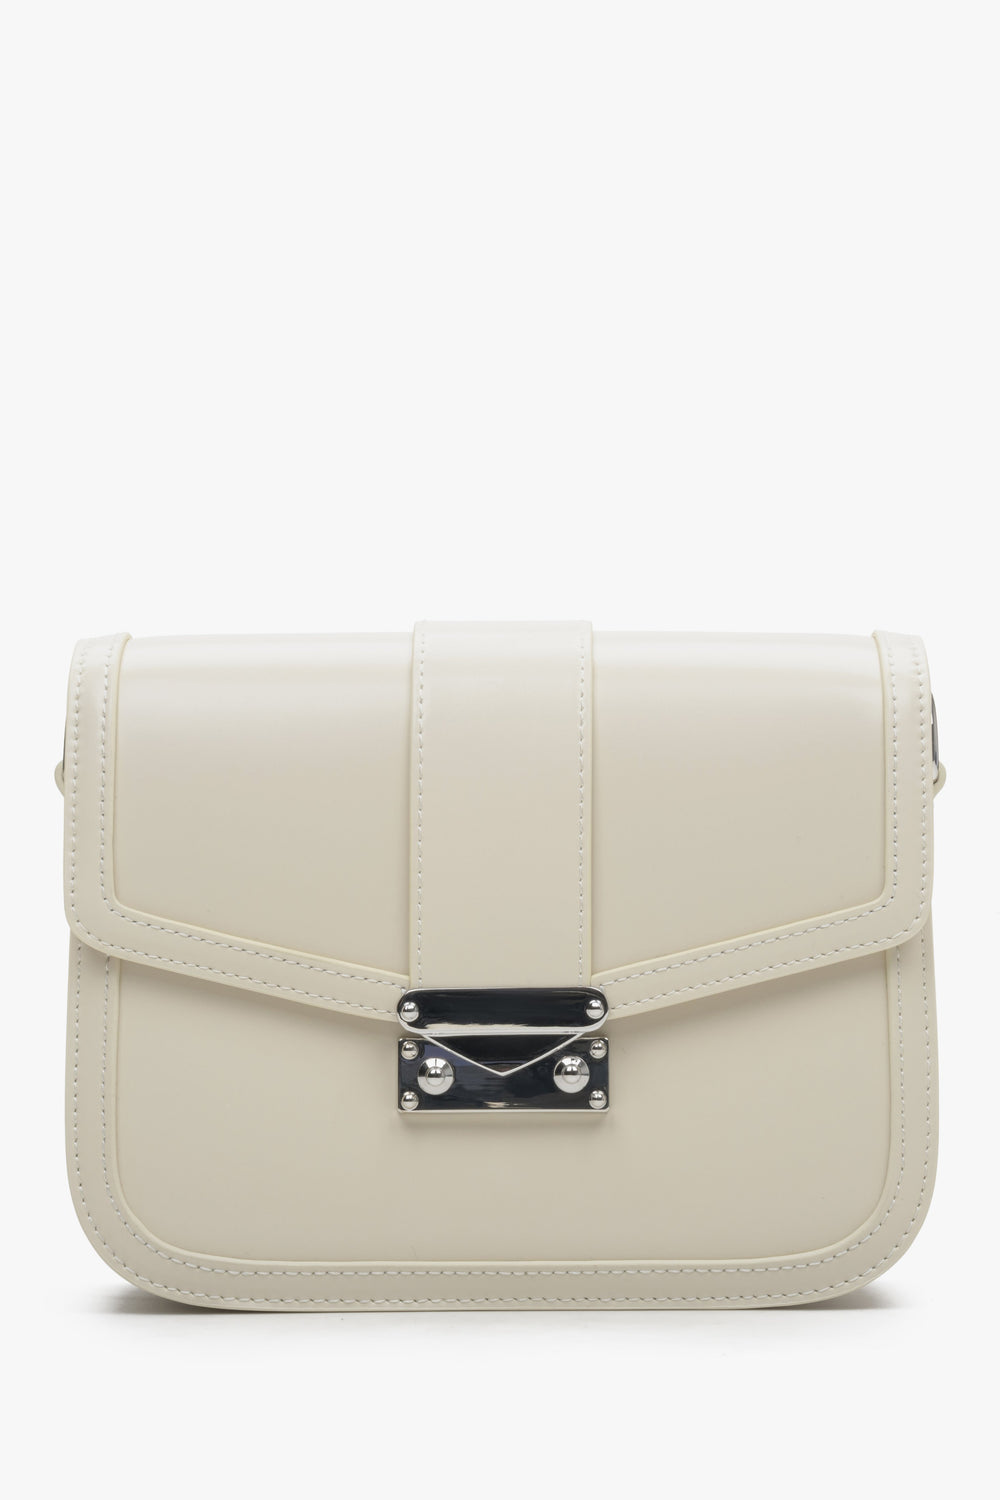 Women's Small Light Beige Handbag made of Genuine Leather with Silver Hardware Estro ER00113900.